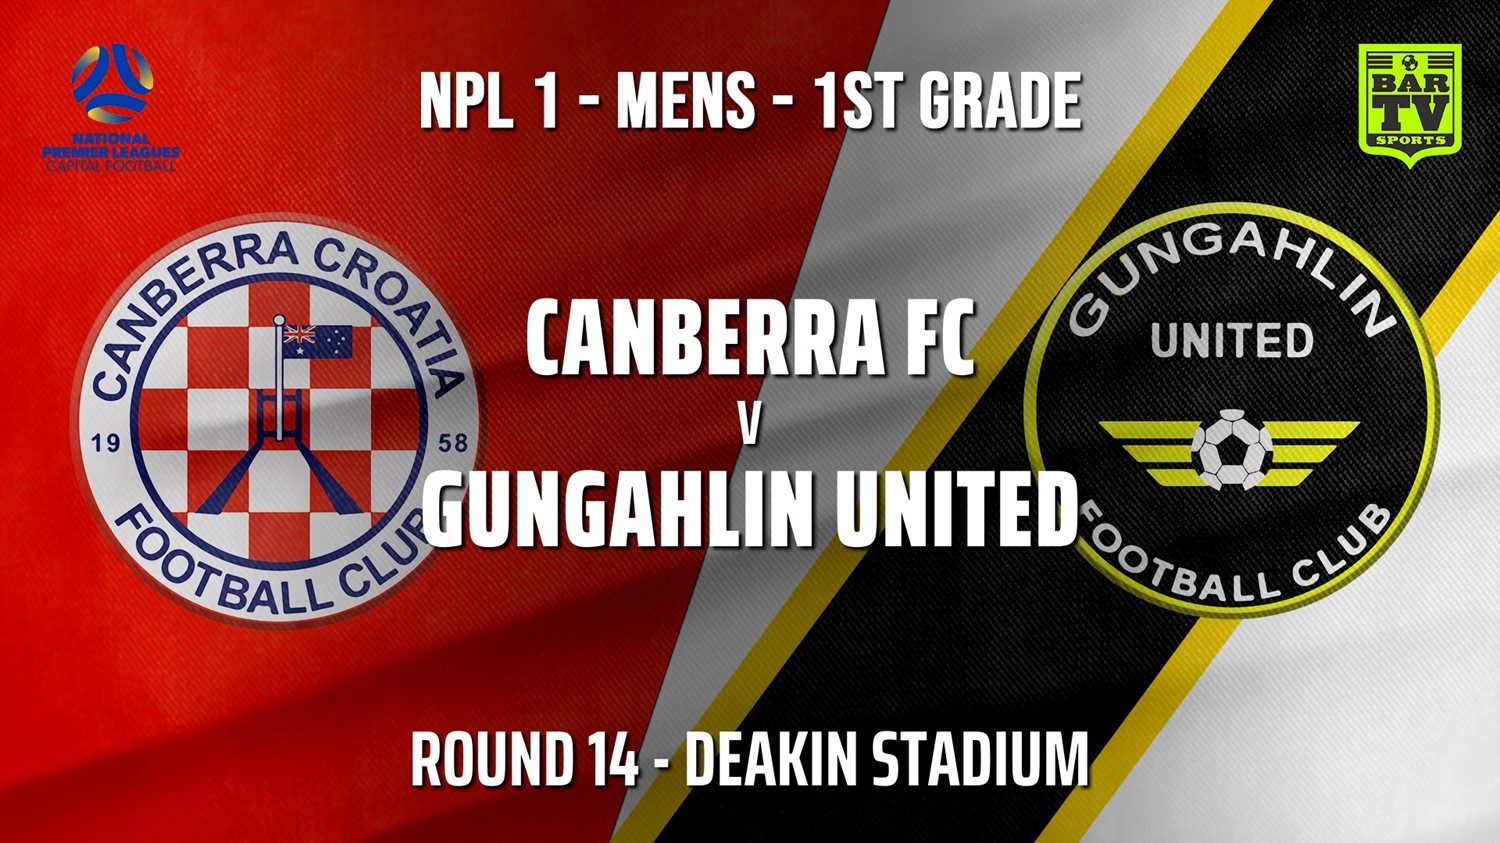 210718-Capital NPL Round 14 - Canberra FC v Gungahlin United FC Minigame Slate Image